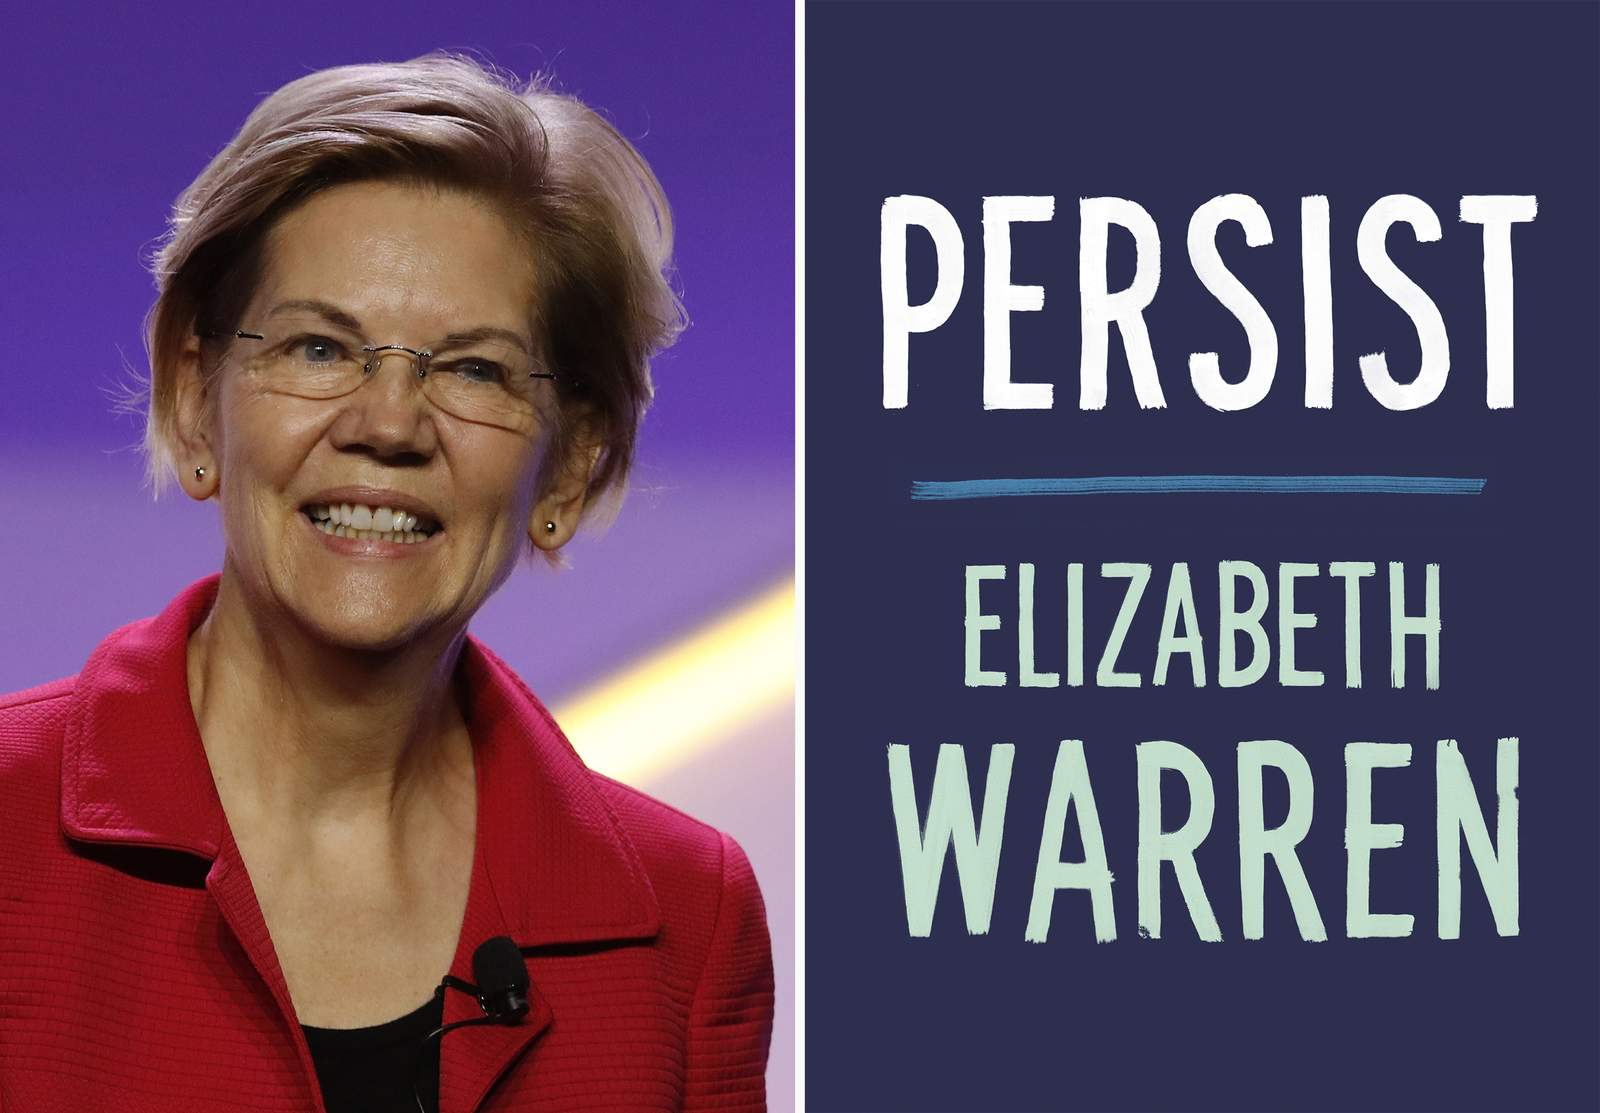 Sen. Elizabeth Warren's book 'Persist' to come out in April